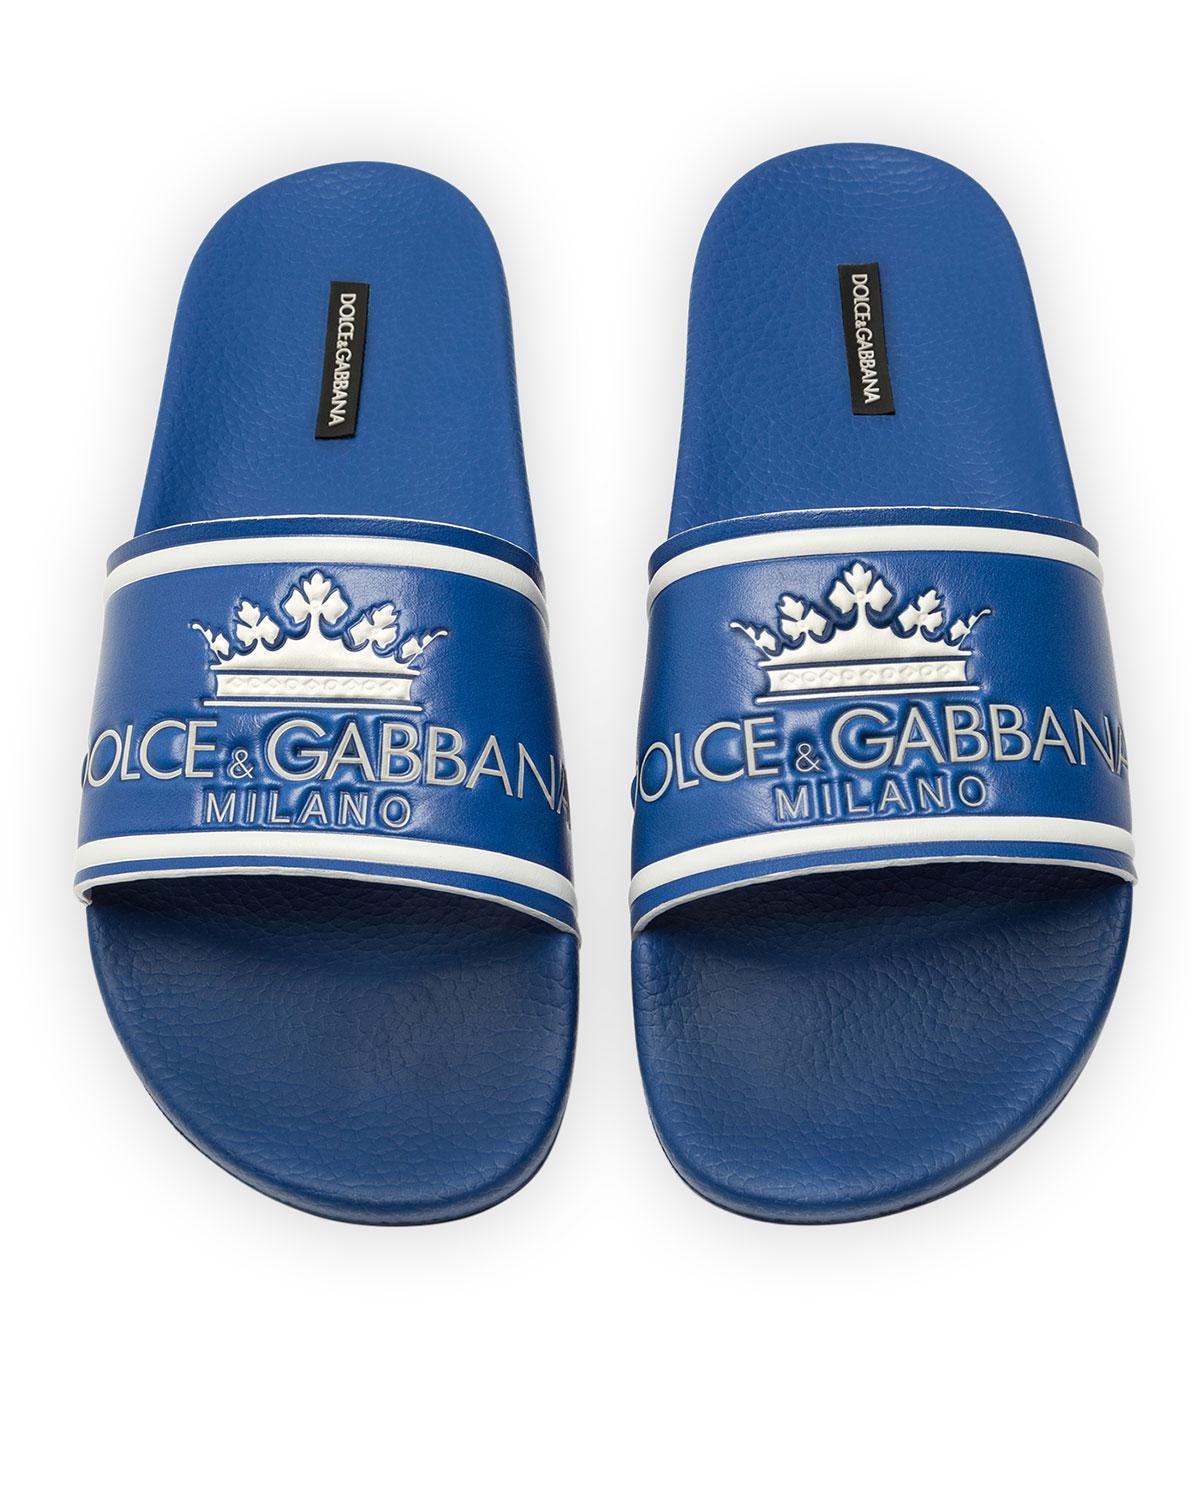 dolce & gabbana slide sandals